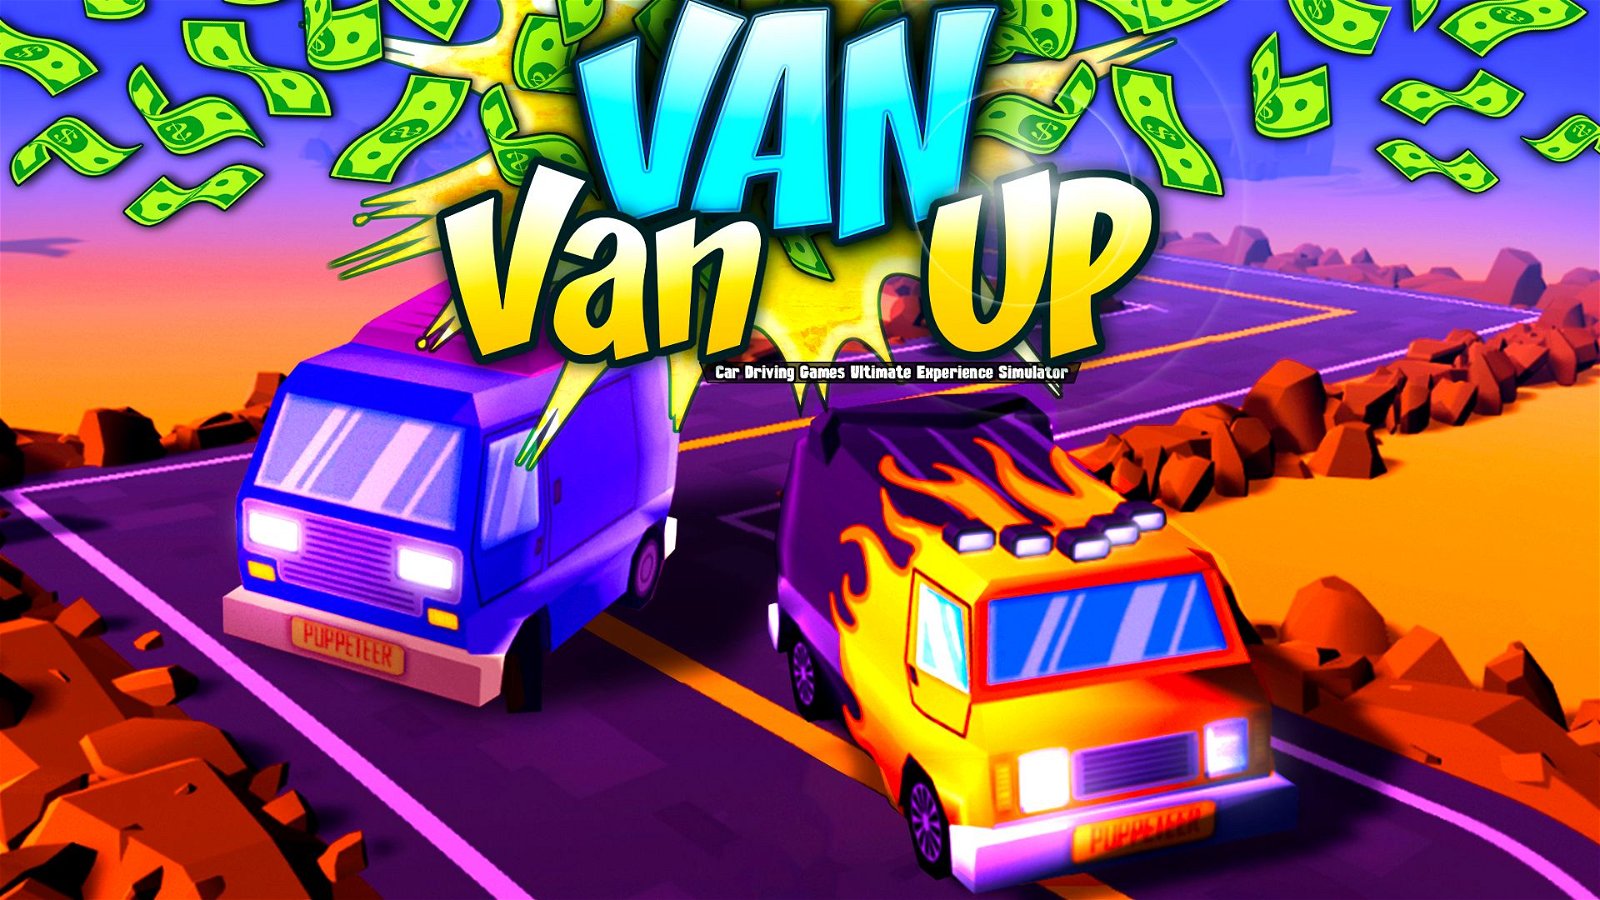 Image of Van Van Up - Car Driving Games Ultimate Experience Simulator